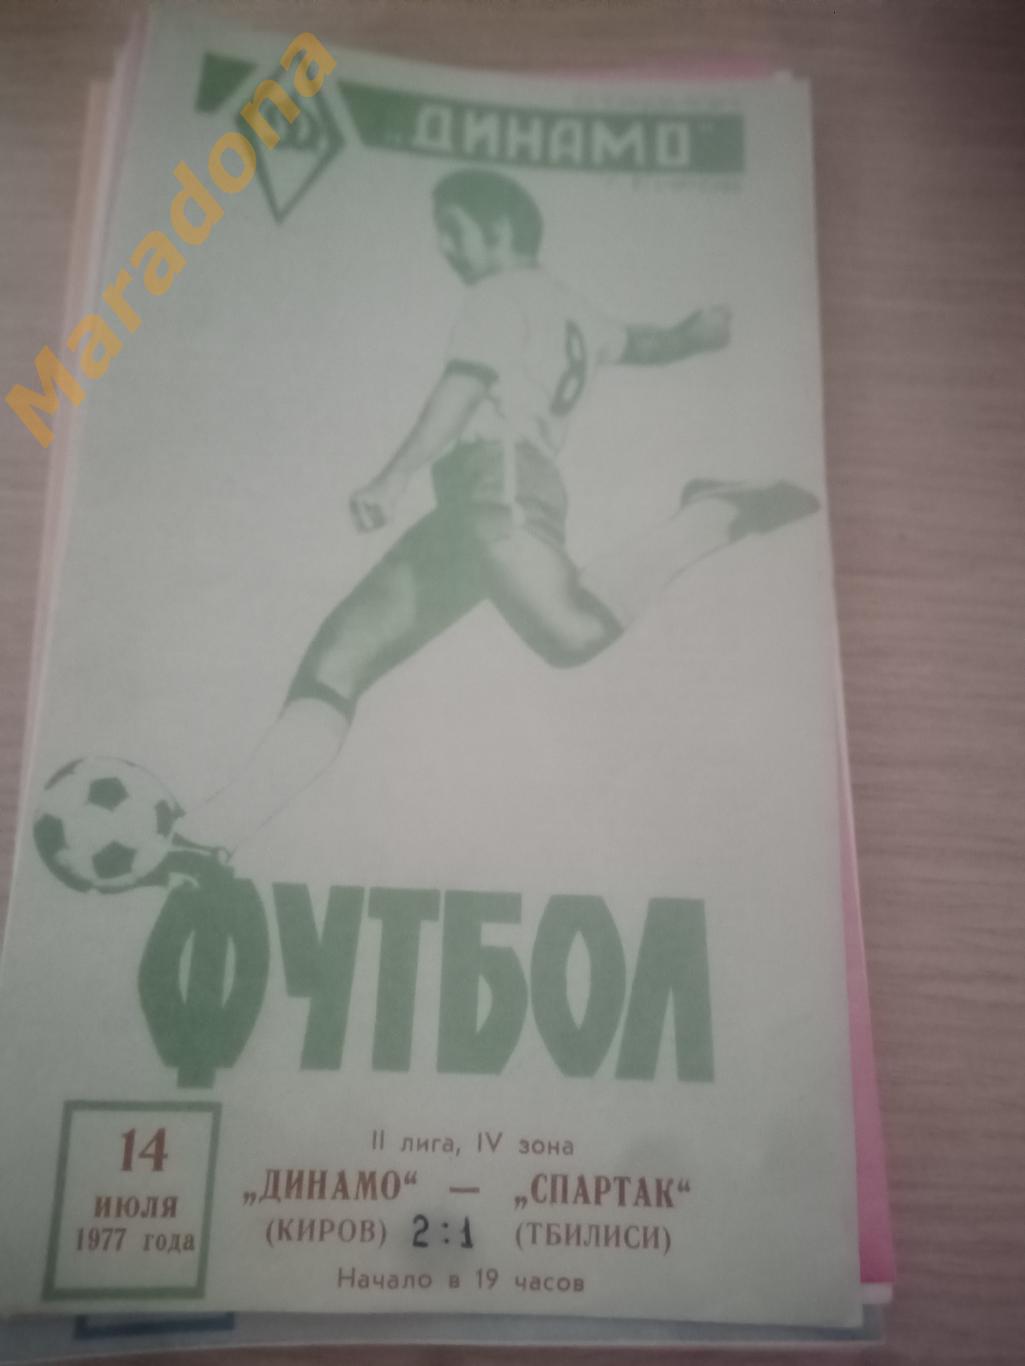 Динамо Киров - Спартак Тбилиси 1977